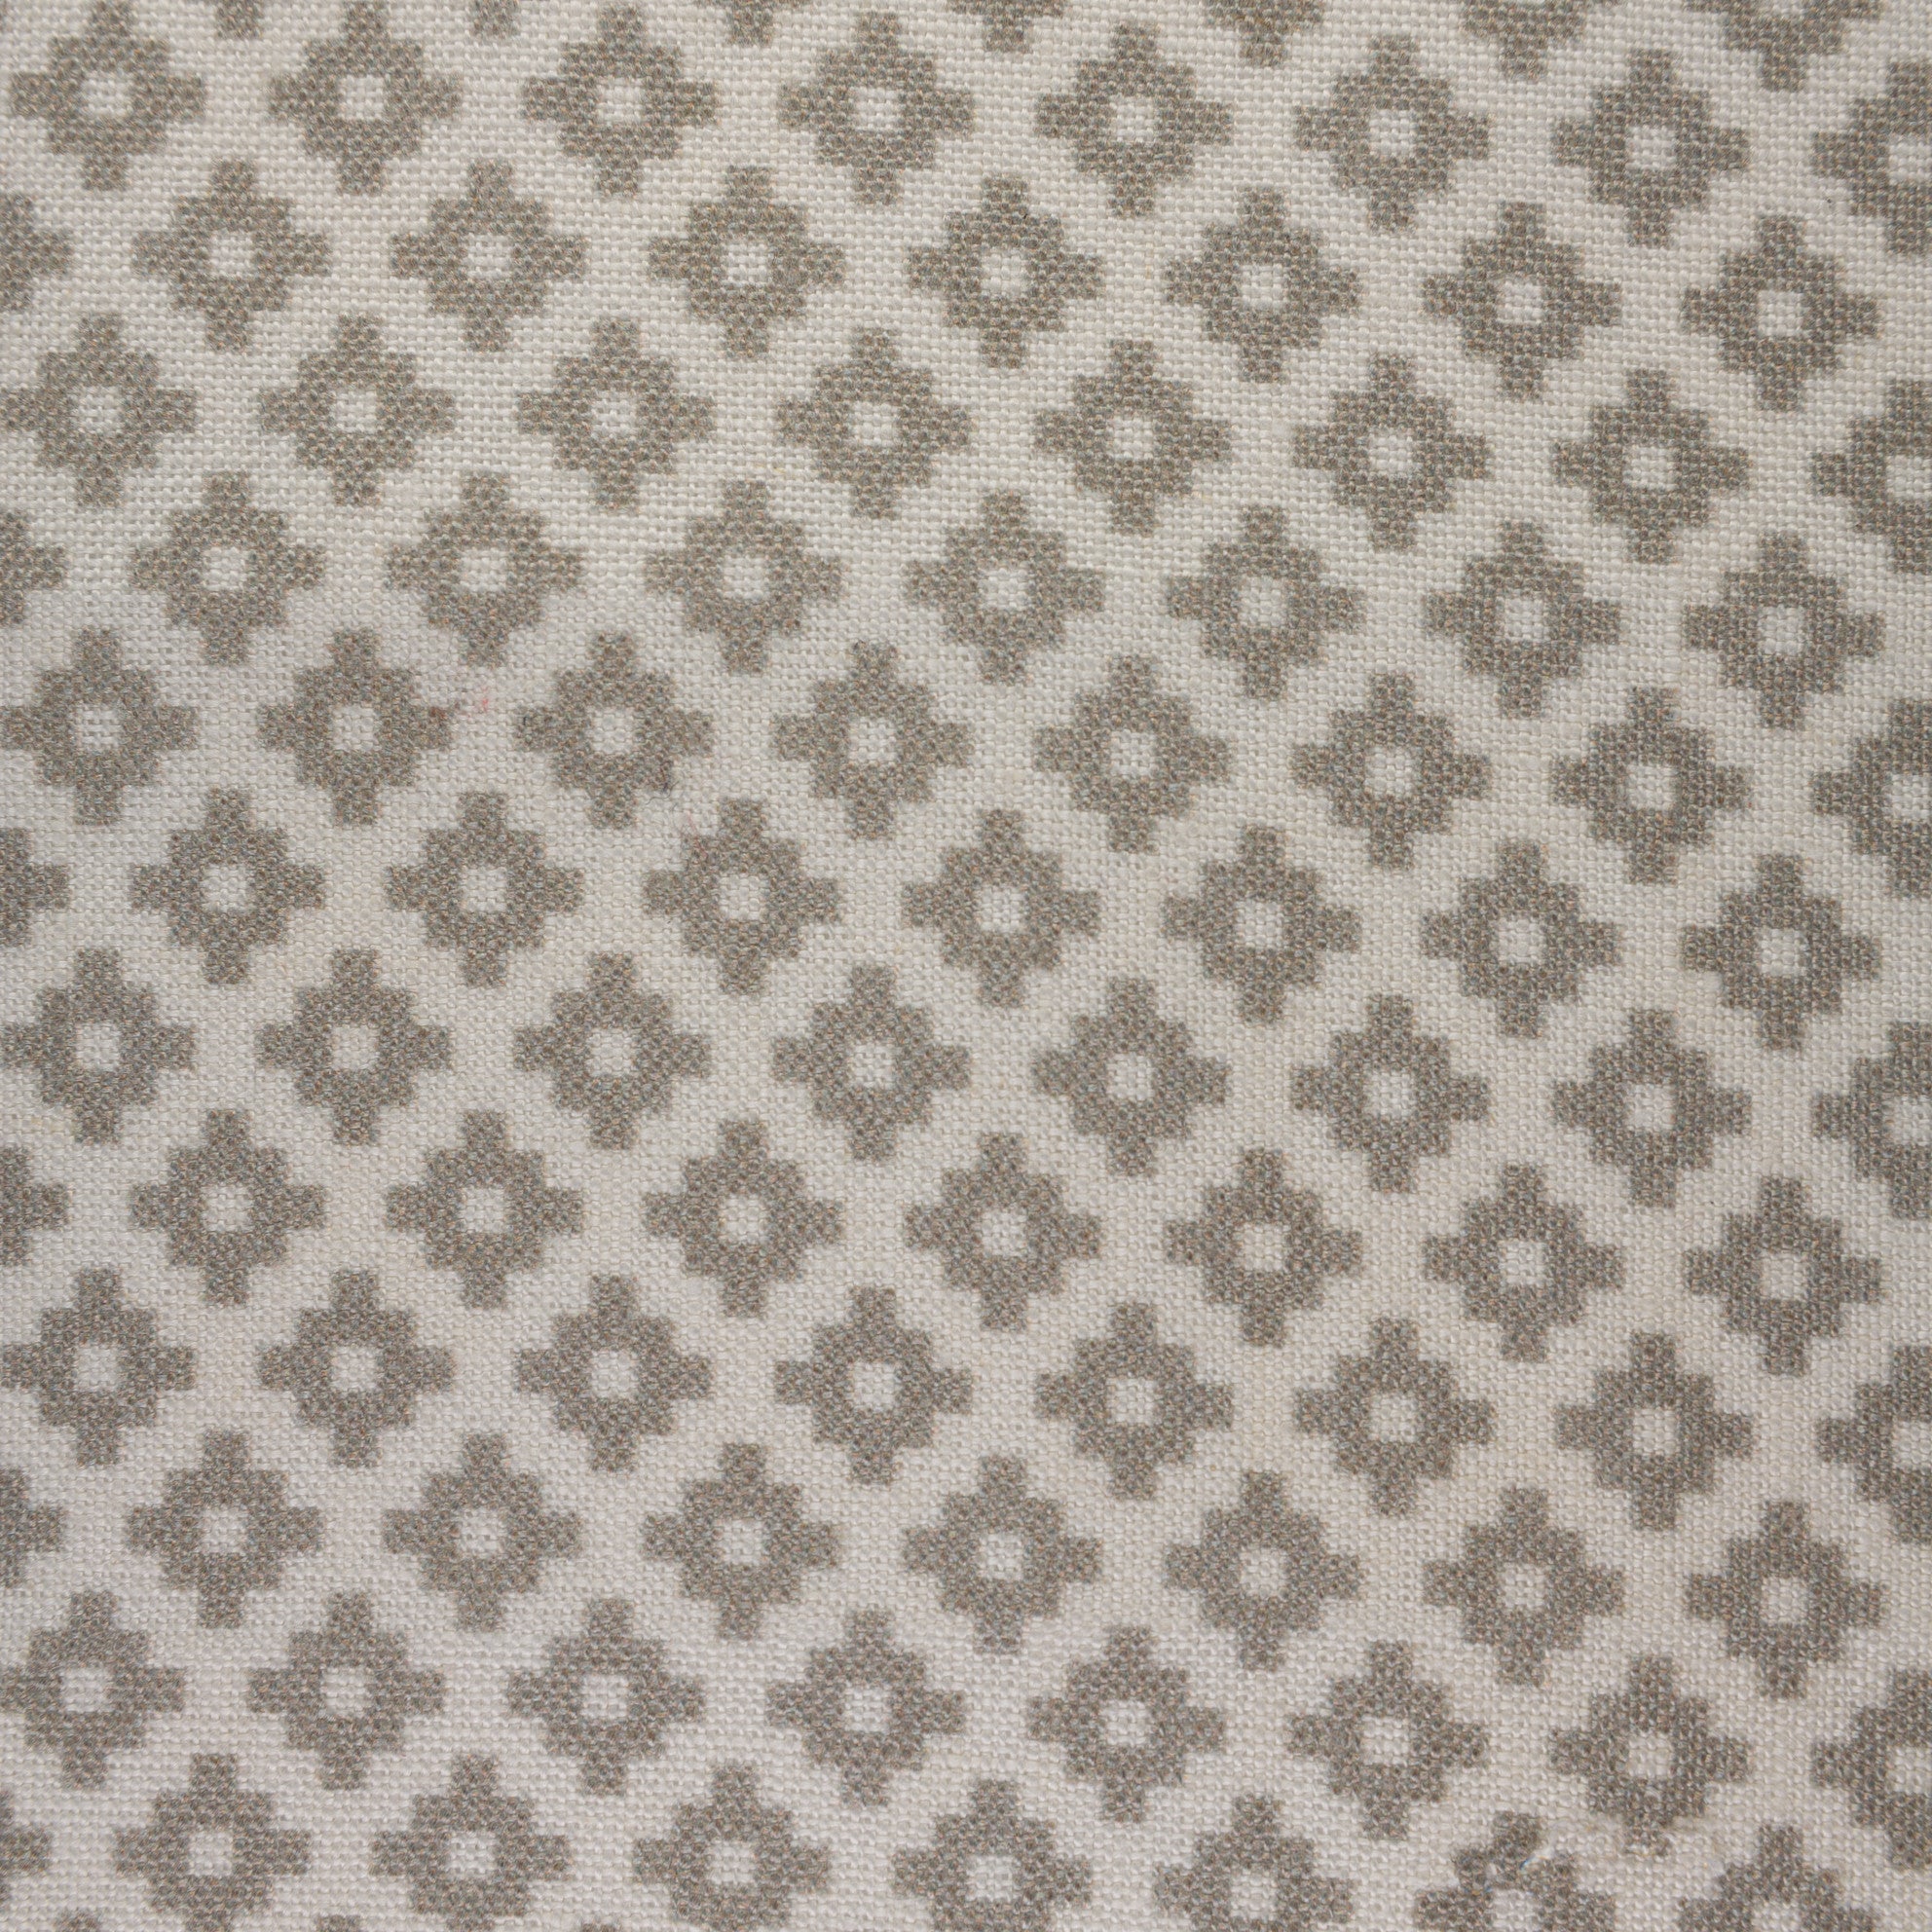 Geometric Print Fabric - Falmouth 49/035 Pepperpot